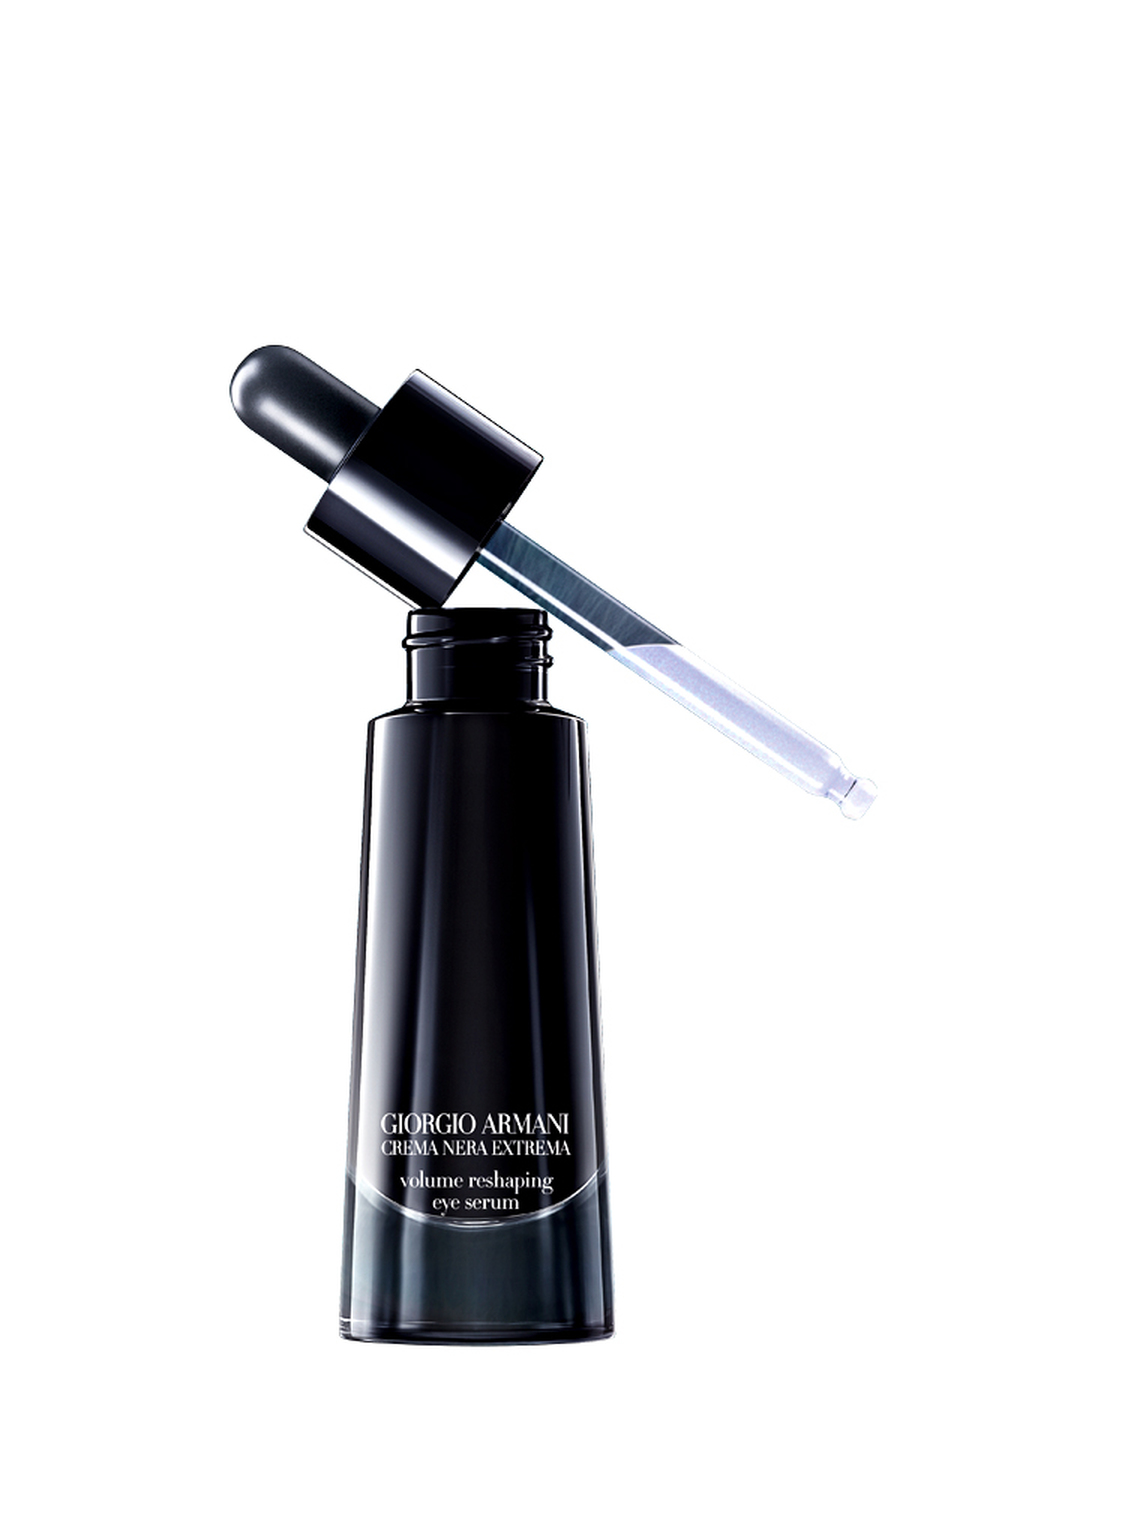 Giorgio Armani Beauty Crema Nera Extrema Volume Reshaping Eye Serum 15 ml